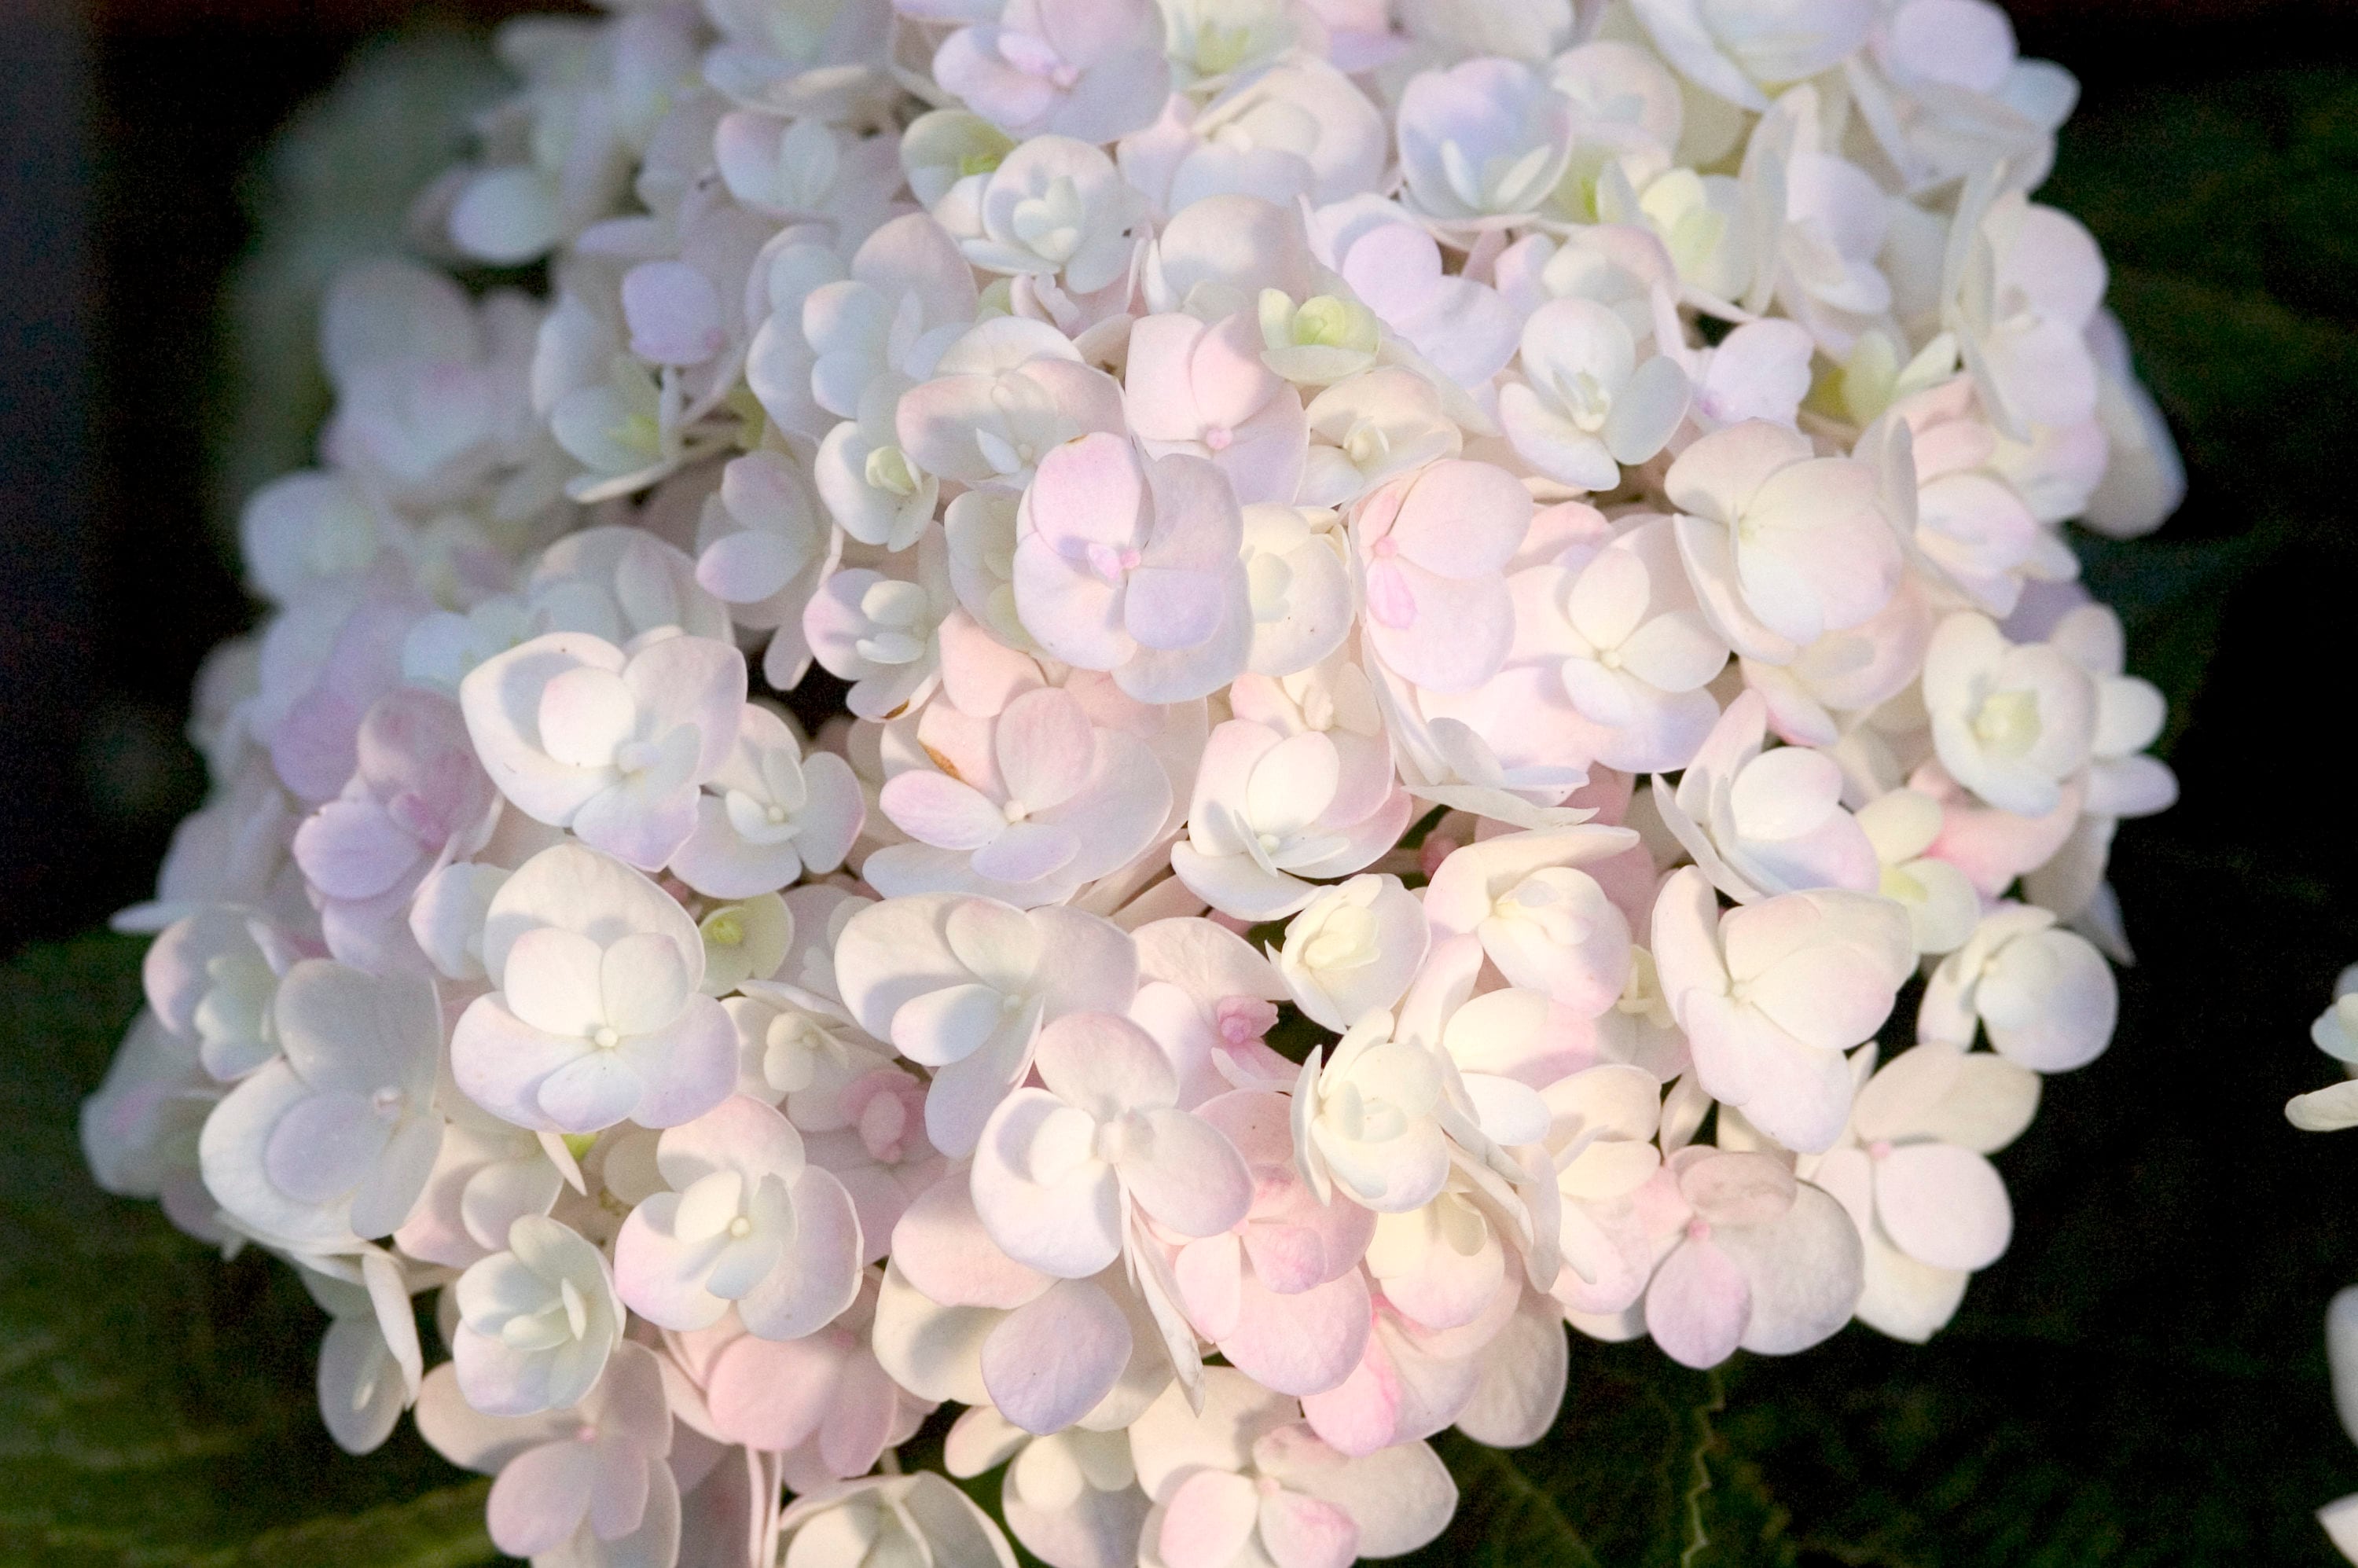 Endless Summer White Blushing Bride Hydrangea Flowering Shrub in 2